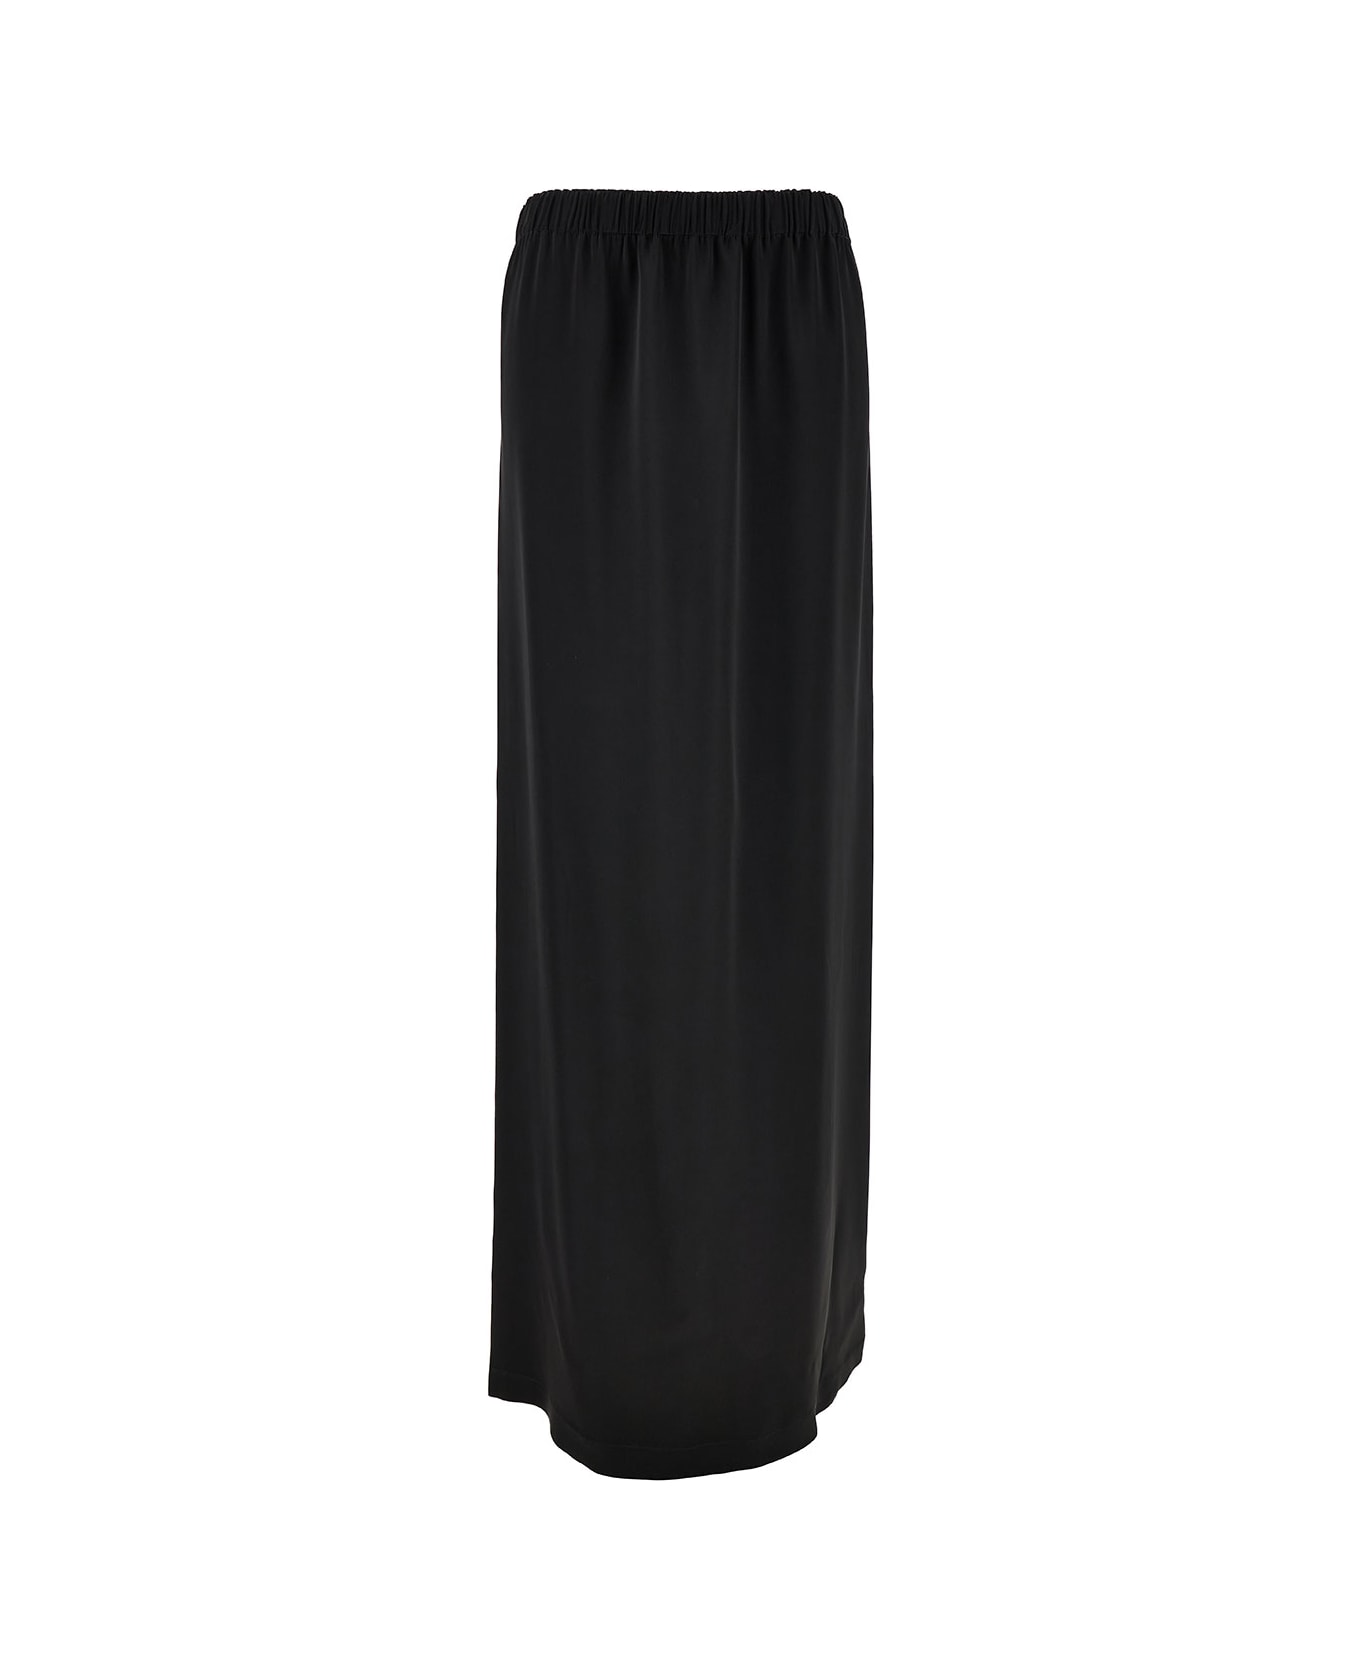 Fabiana Filippi Long Black Skirt With Elastic Waistband And Split In Fabric Woman - Black